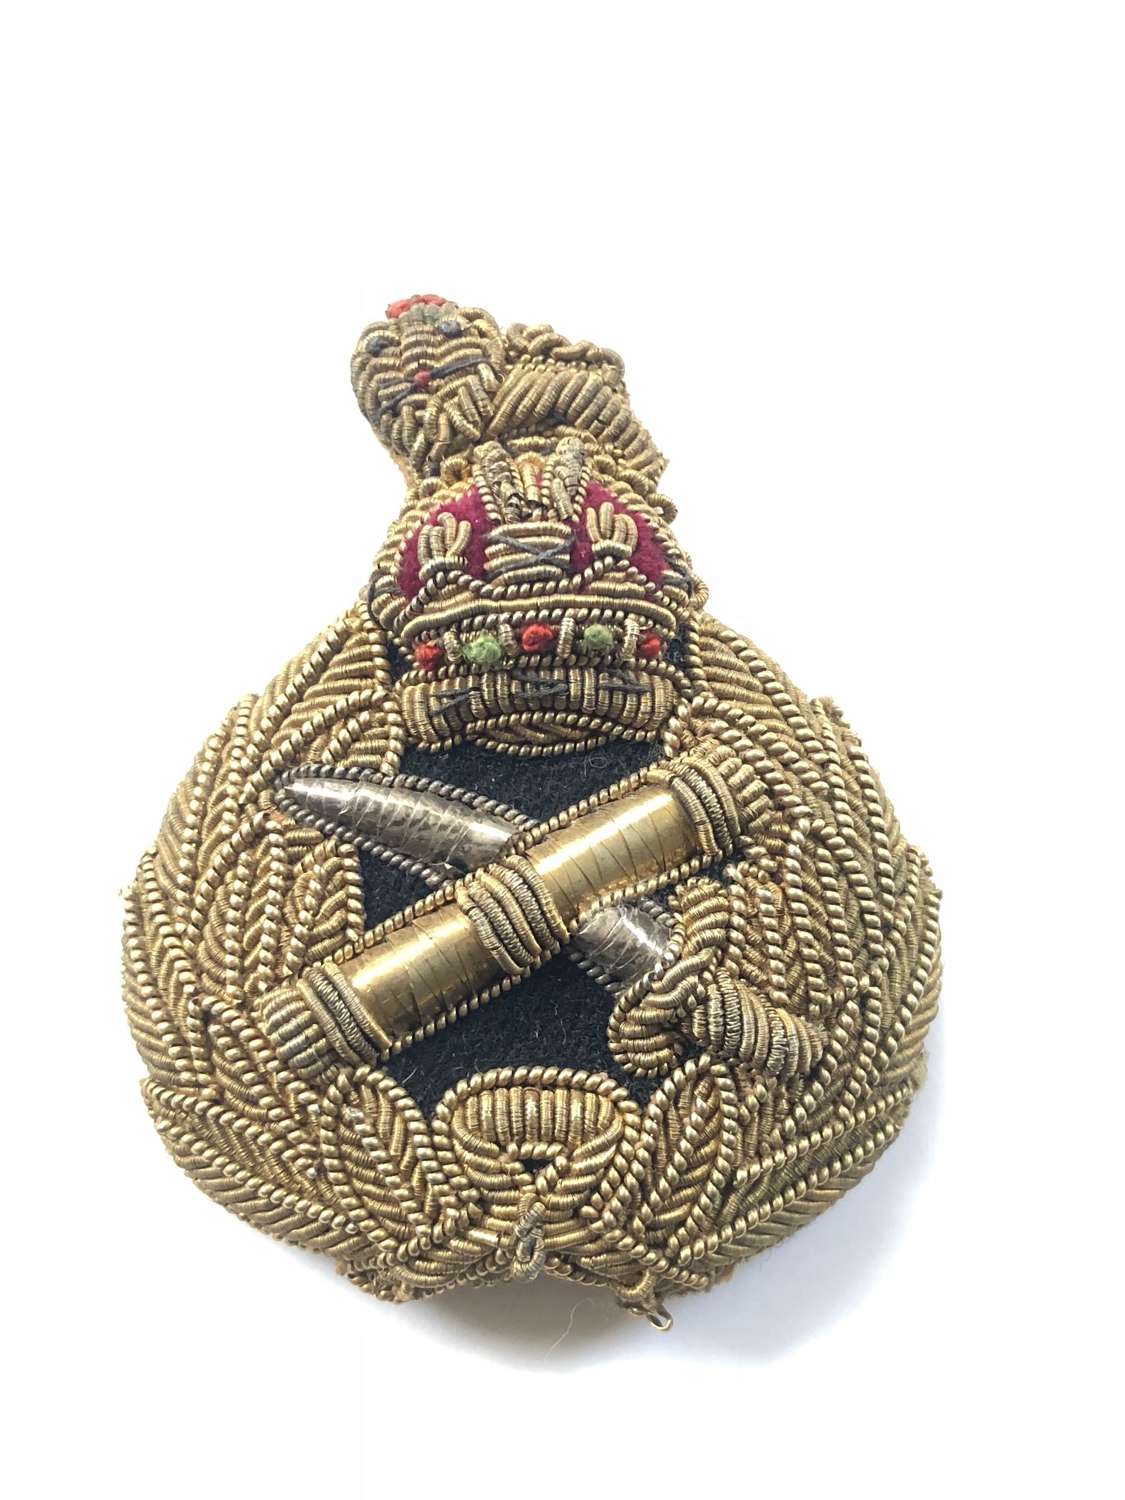 WW1/WW2 Pattern British Army General’s Cap badge.